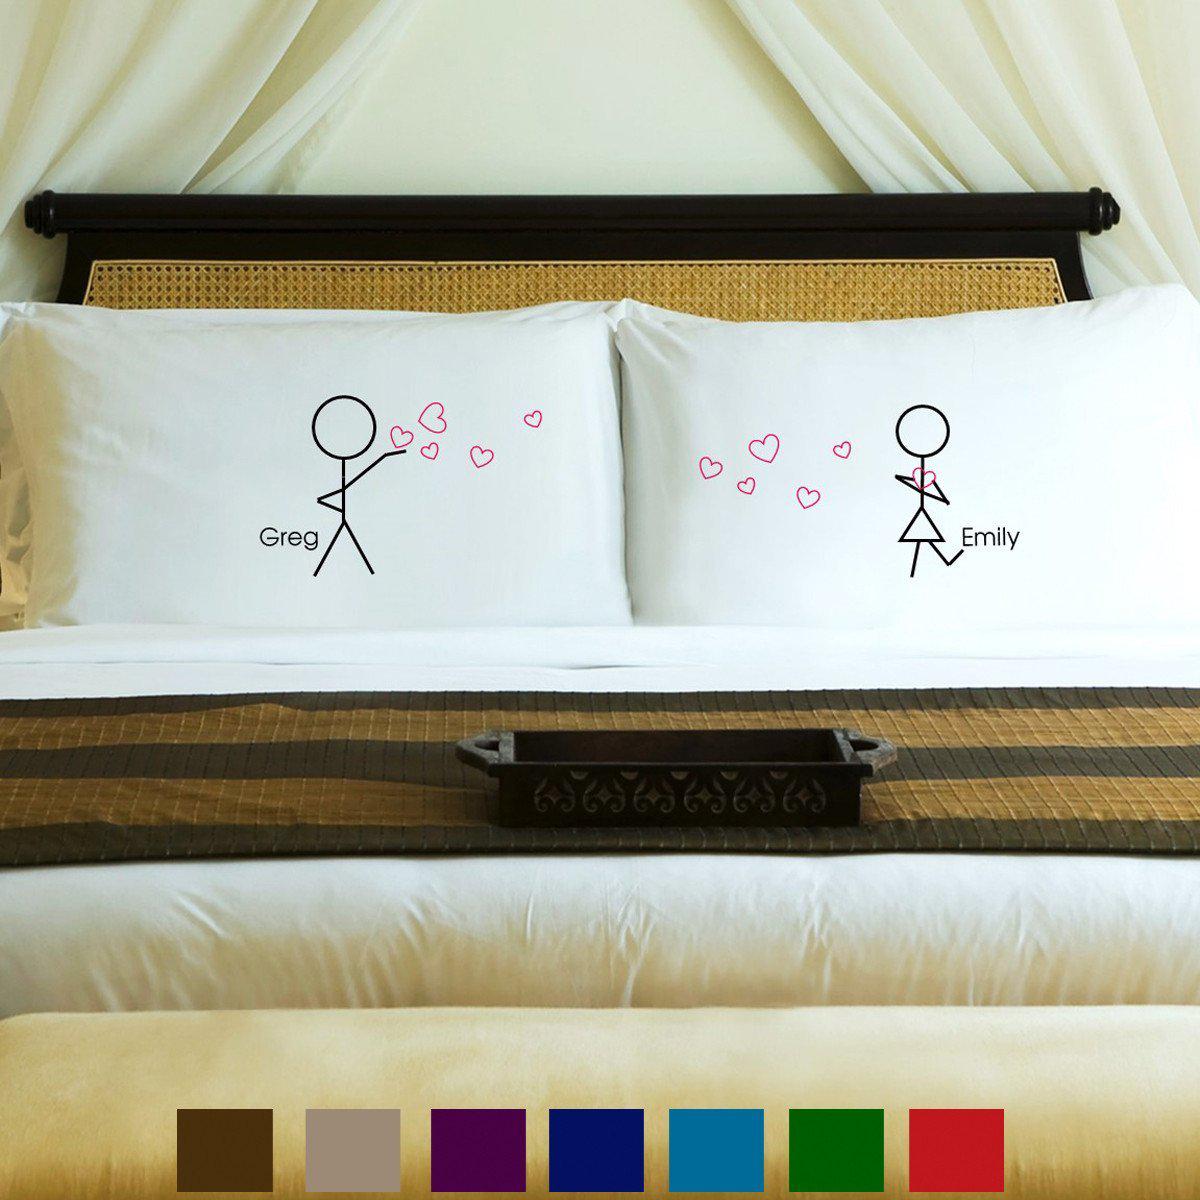 Personalized Couples Pillow Case Set